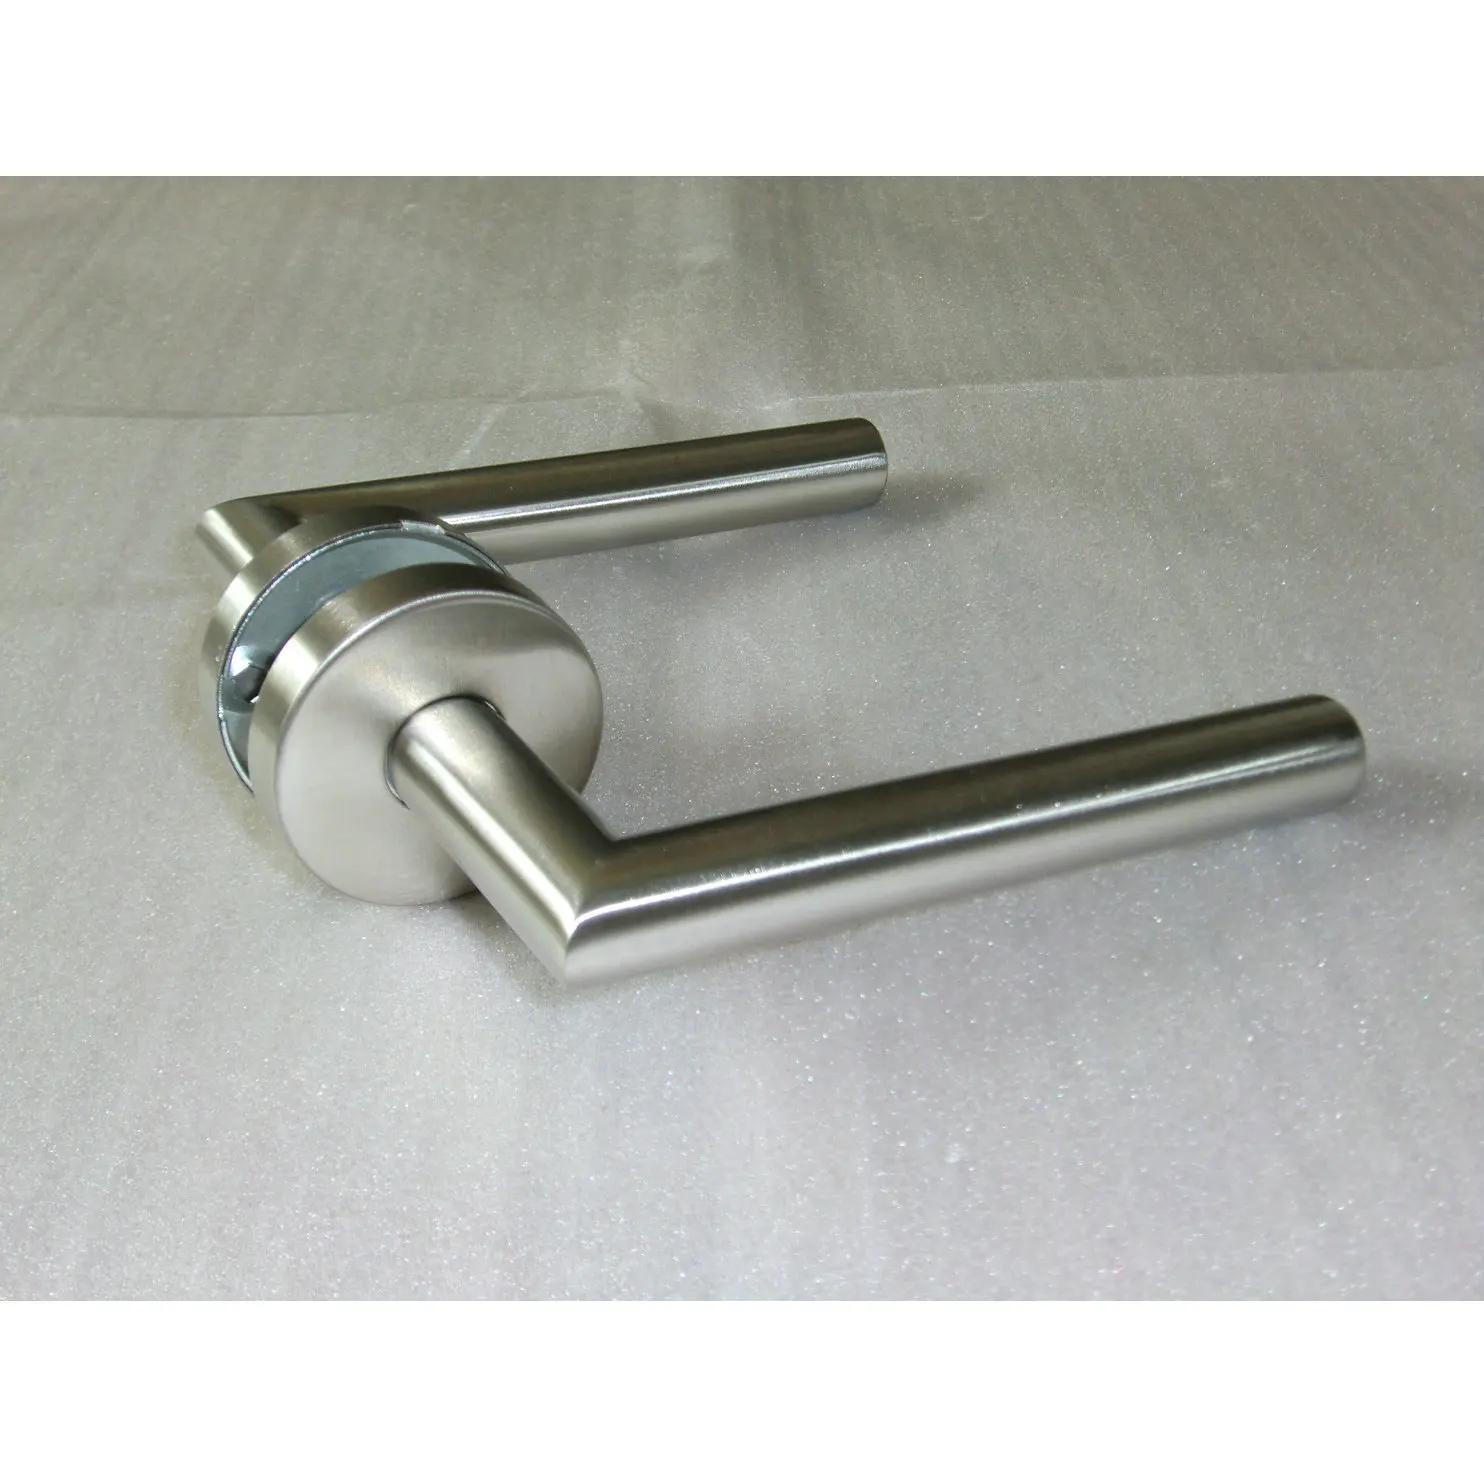 
Popular stainless steel door lever handle with plate 